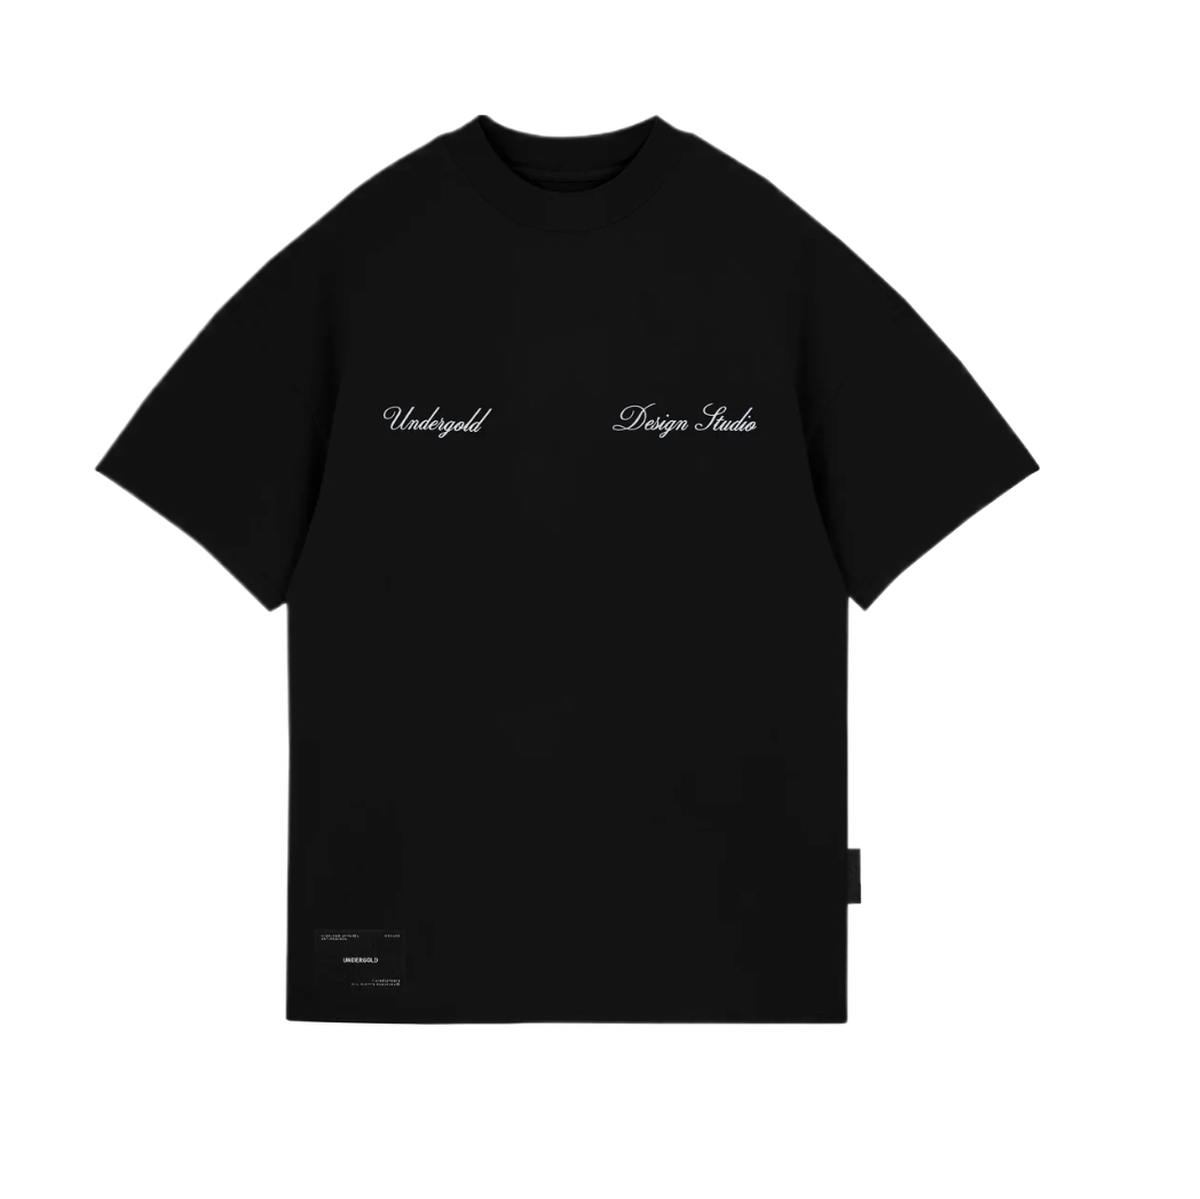 Undergold Genesis PT/1 Basic T-shirt Black